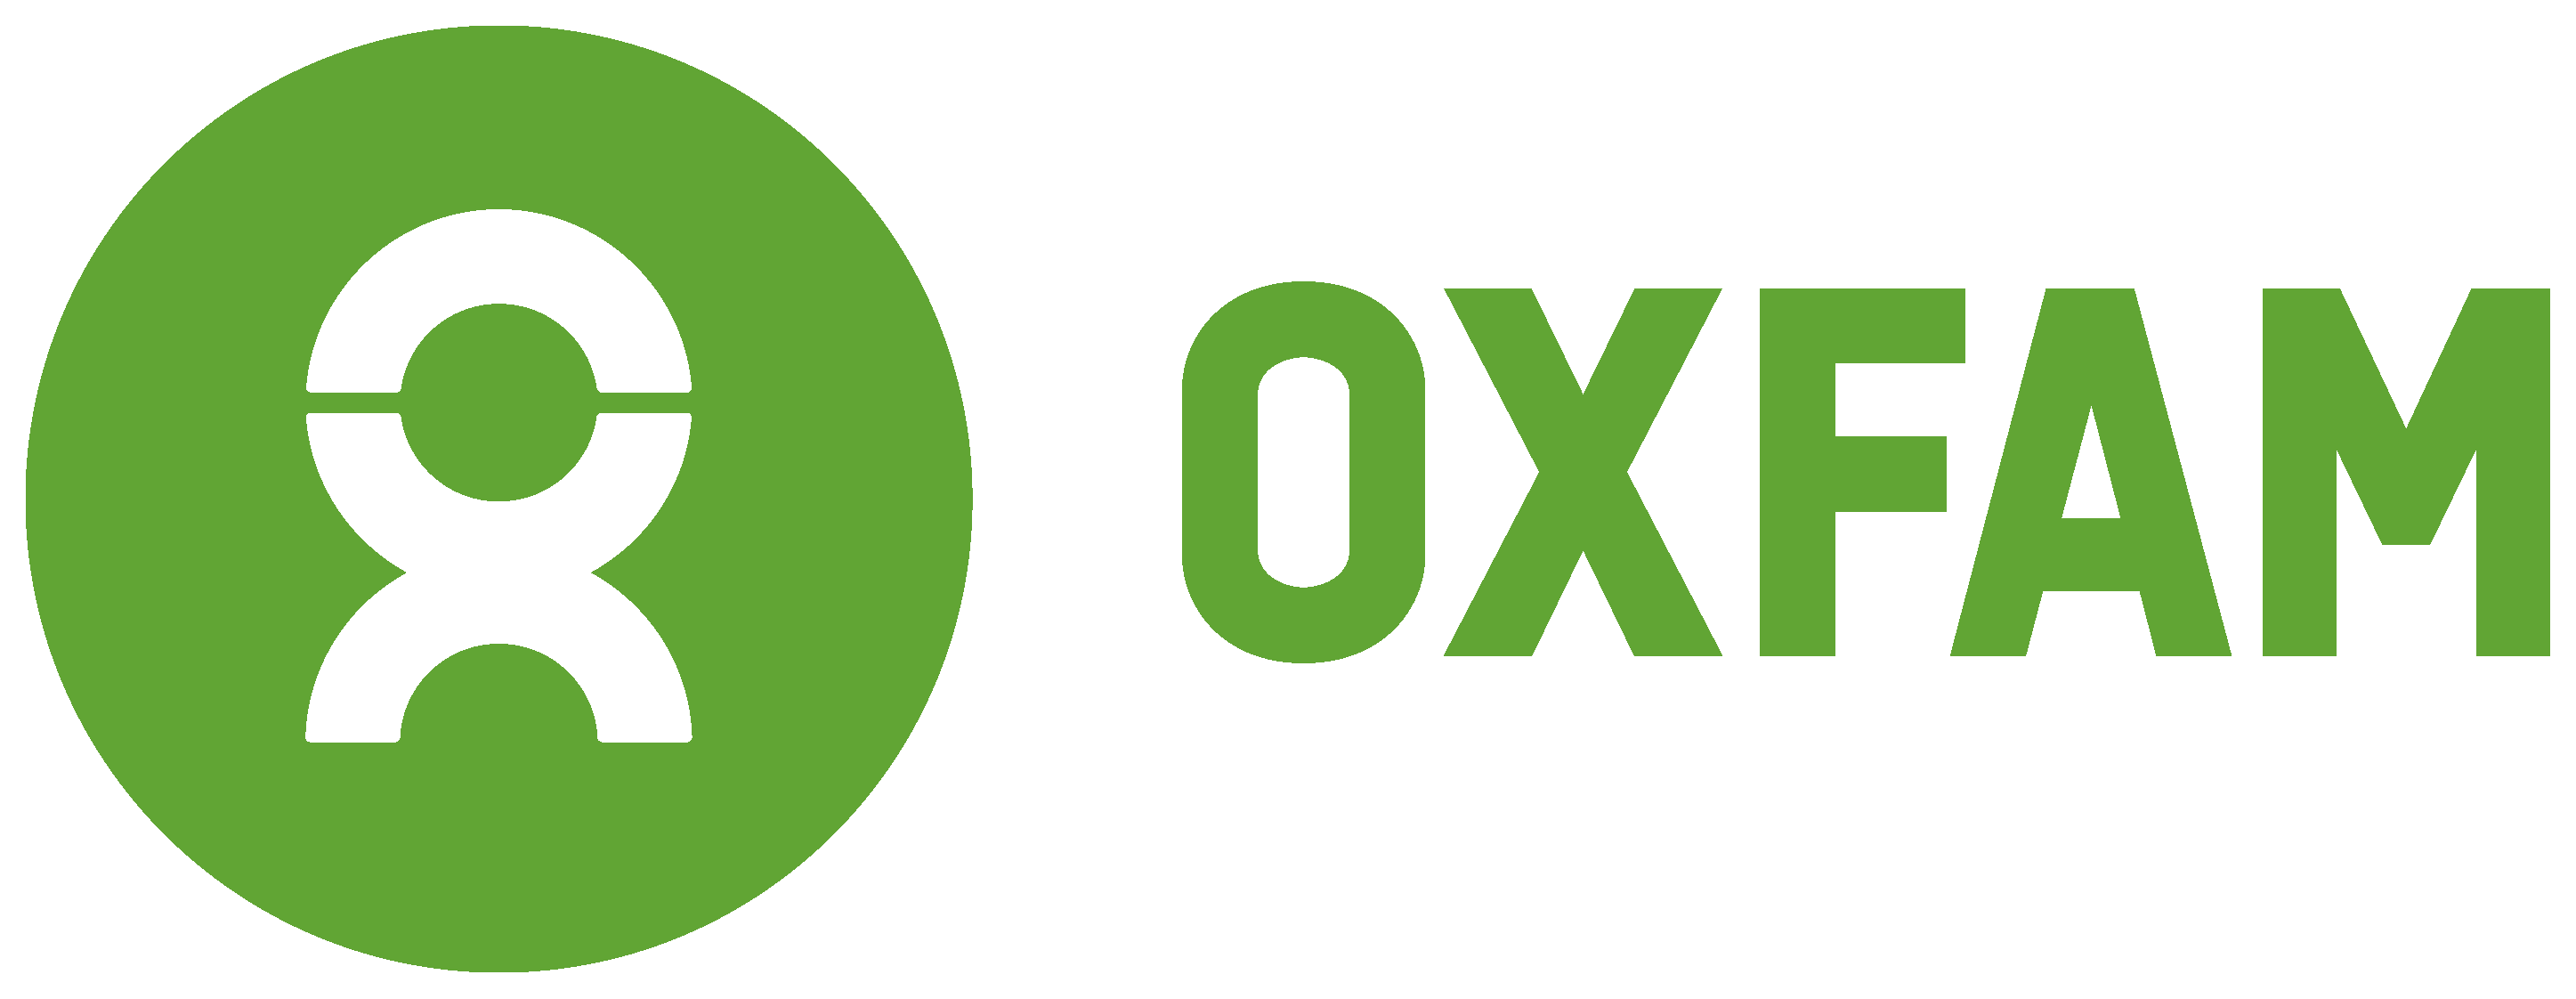 Oxfam is an international confederation of 19 organizations